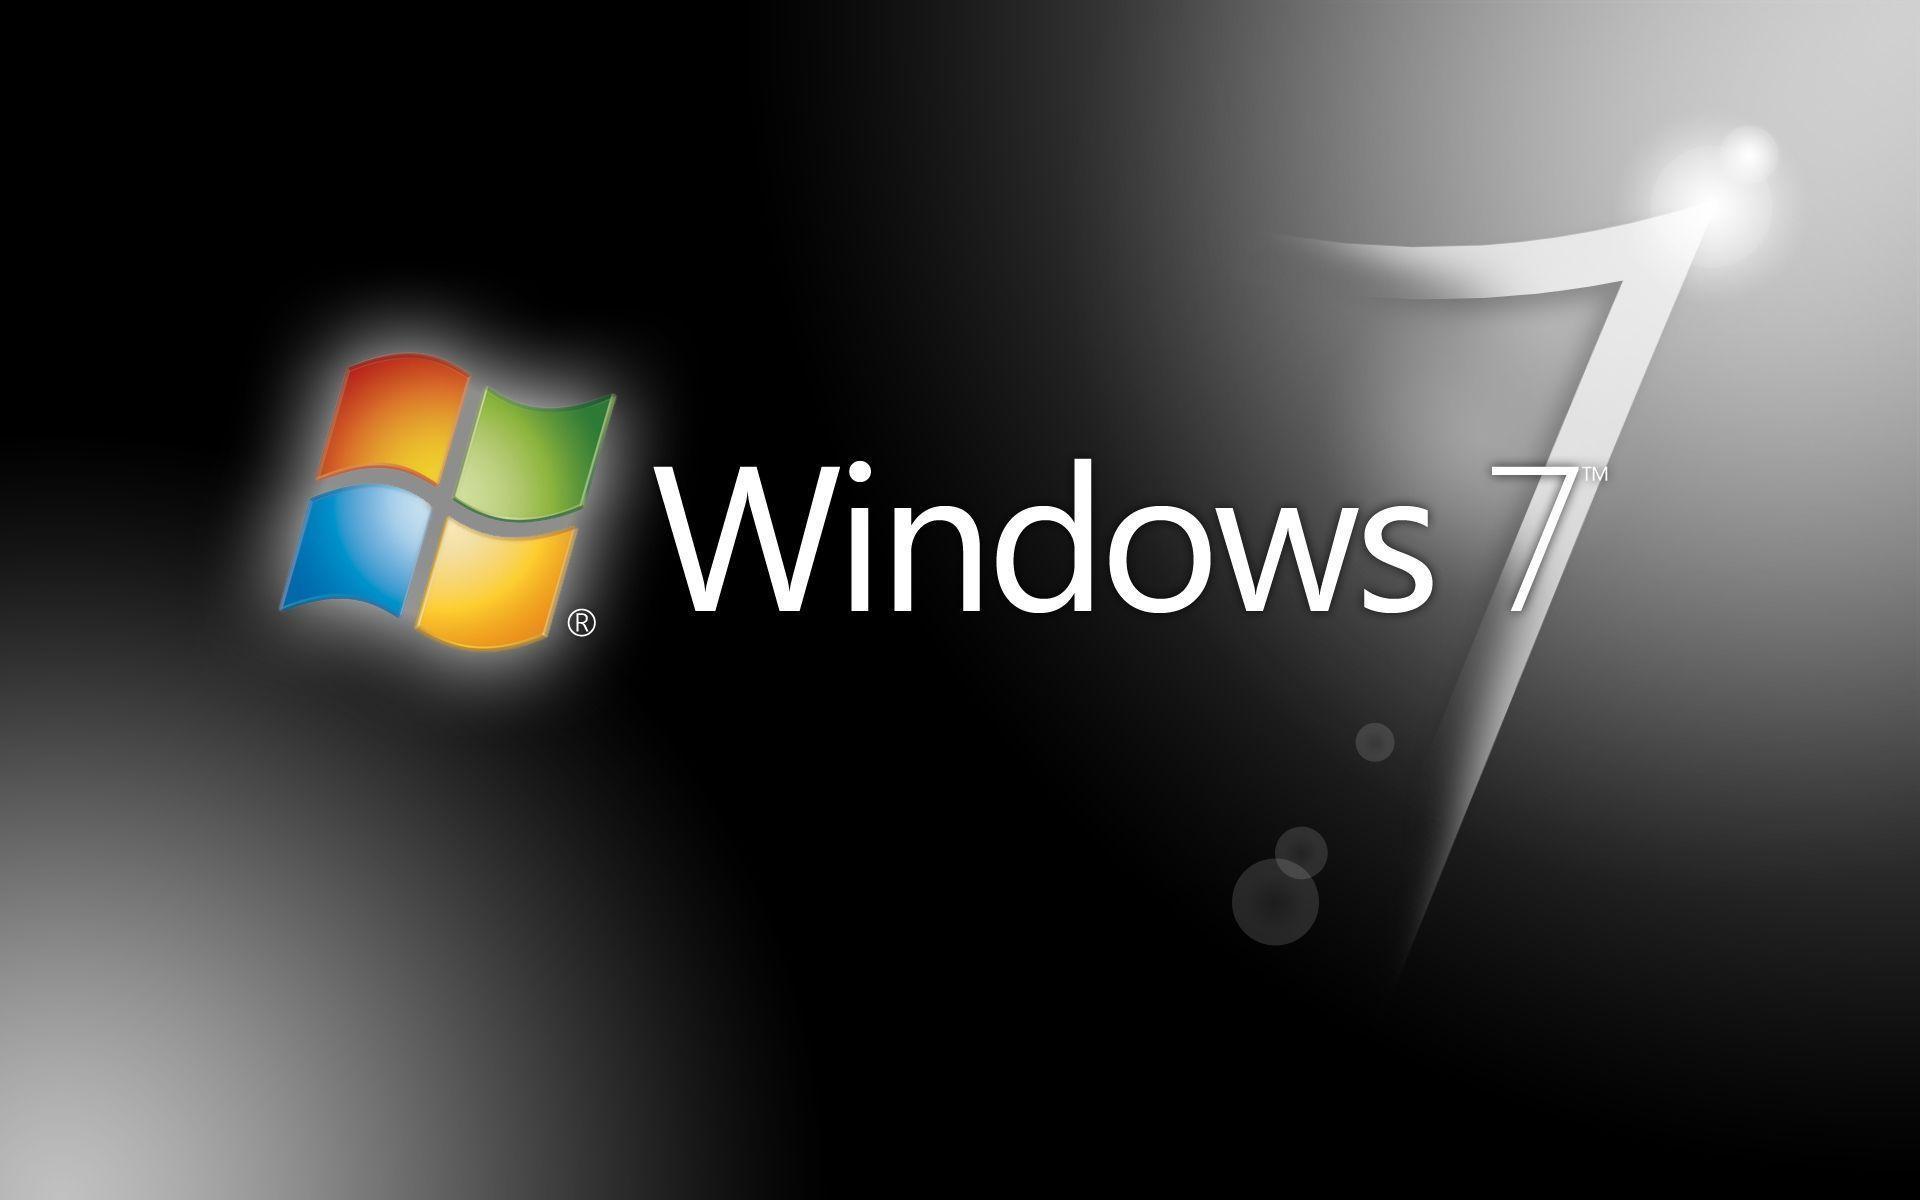 Windows 7 Ultimate Logo - Computer: Windows 7 Ultimate, picture nr. 33442